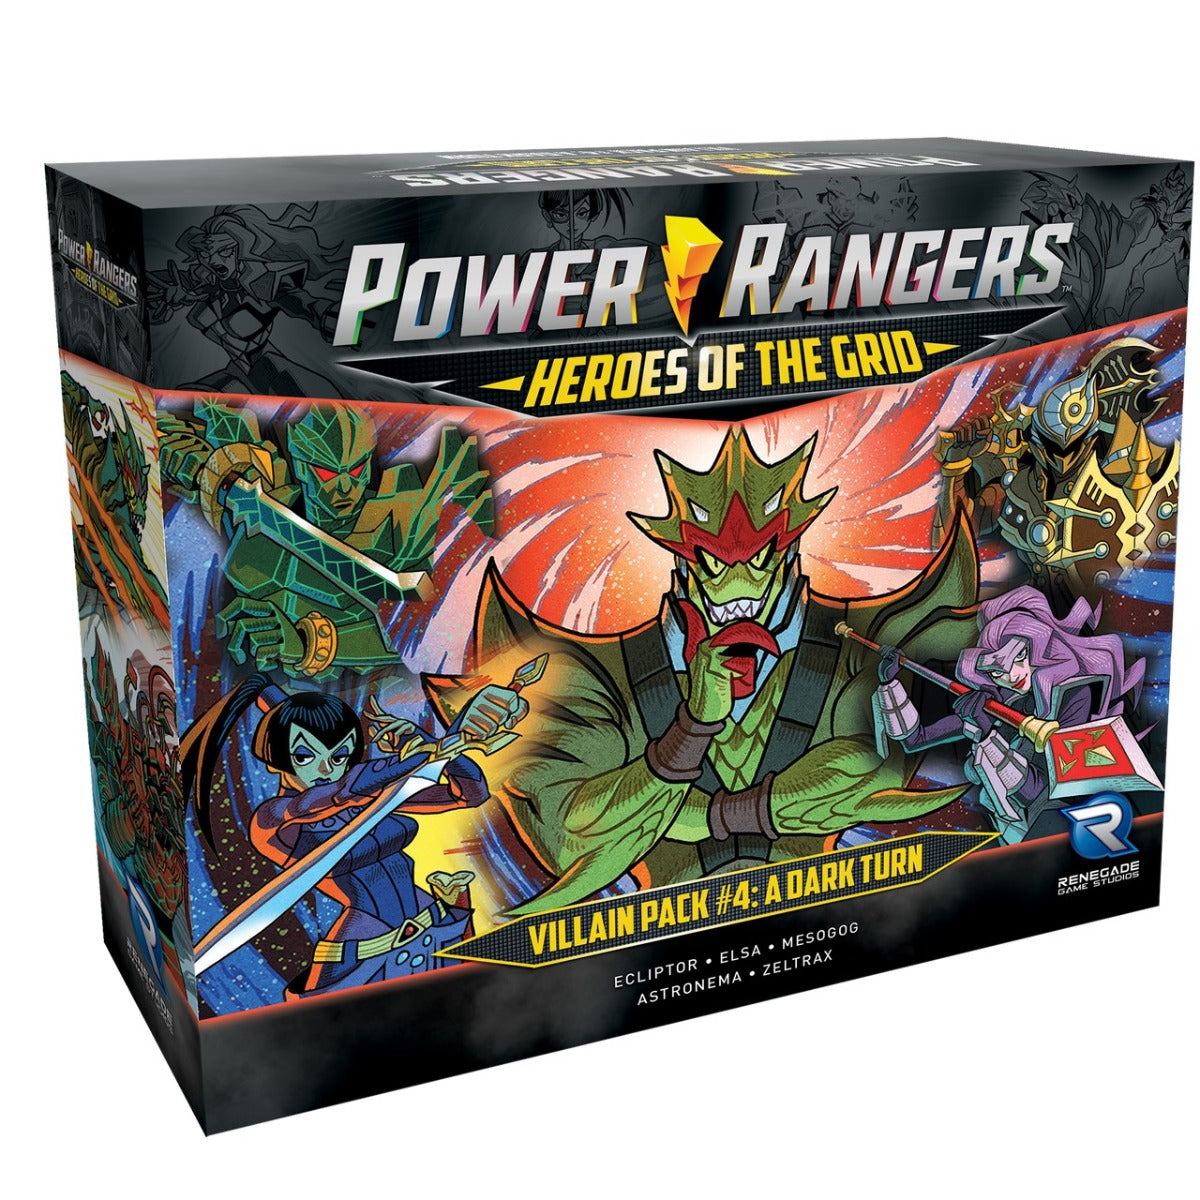 Power Rangers Heroes of the Grid - Villain Pack #4